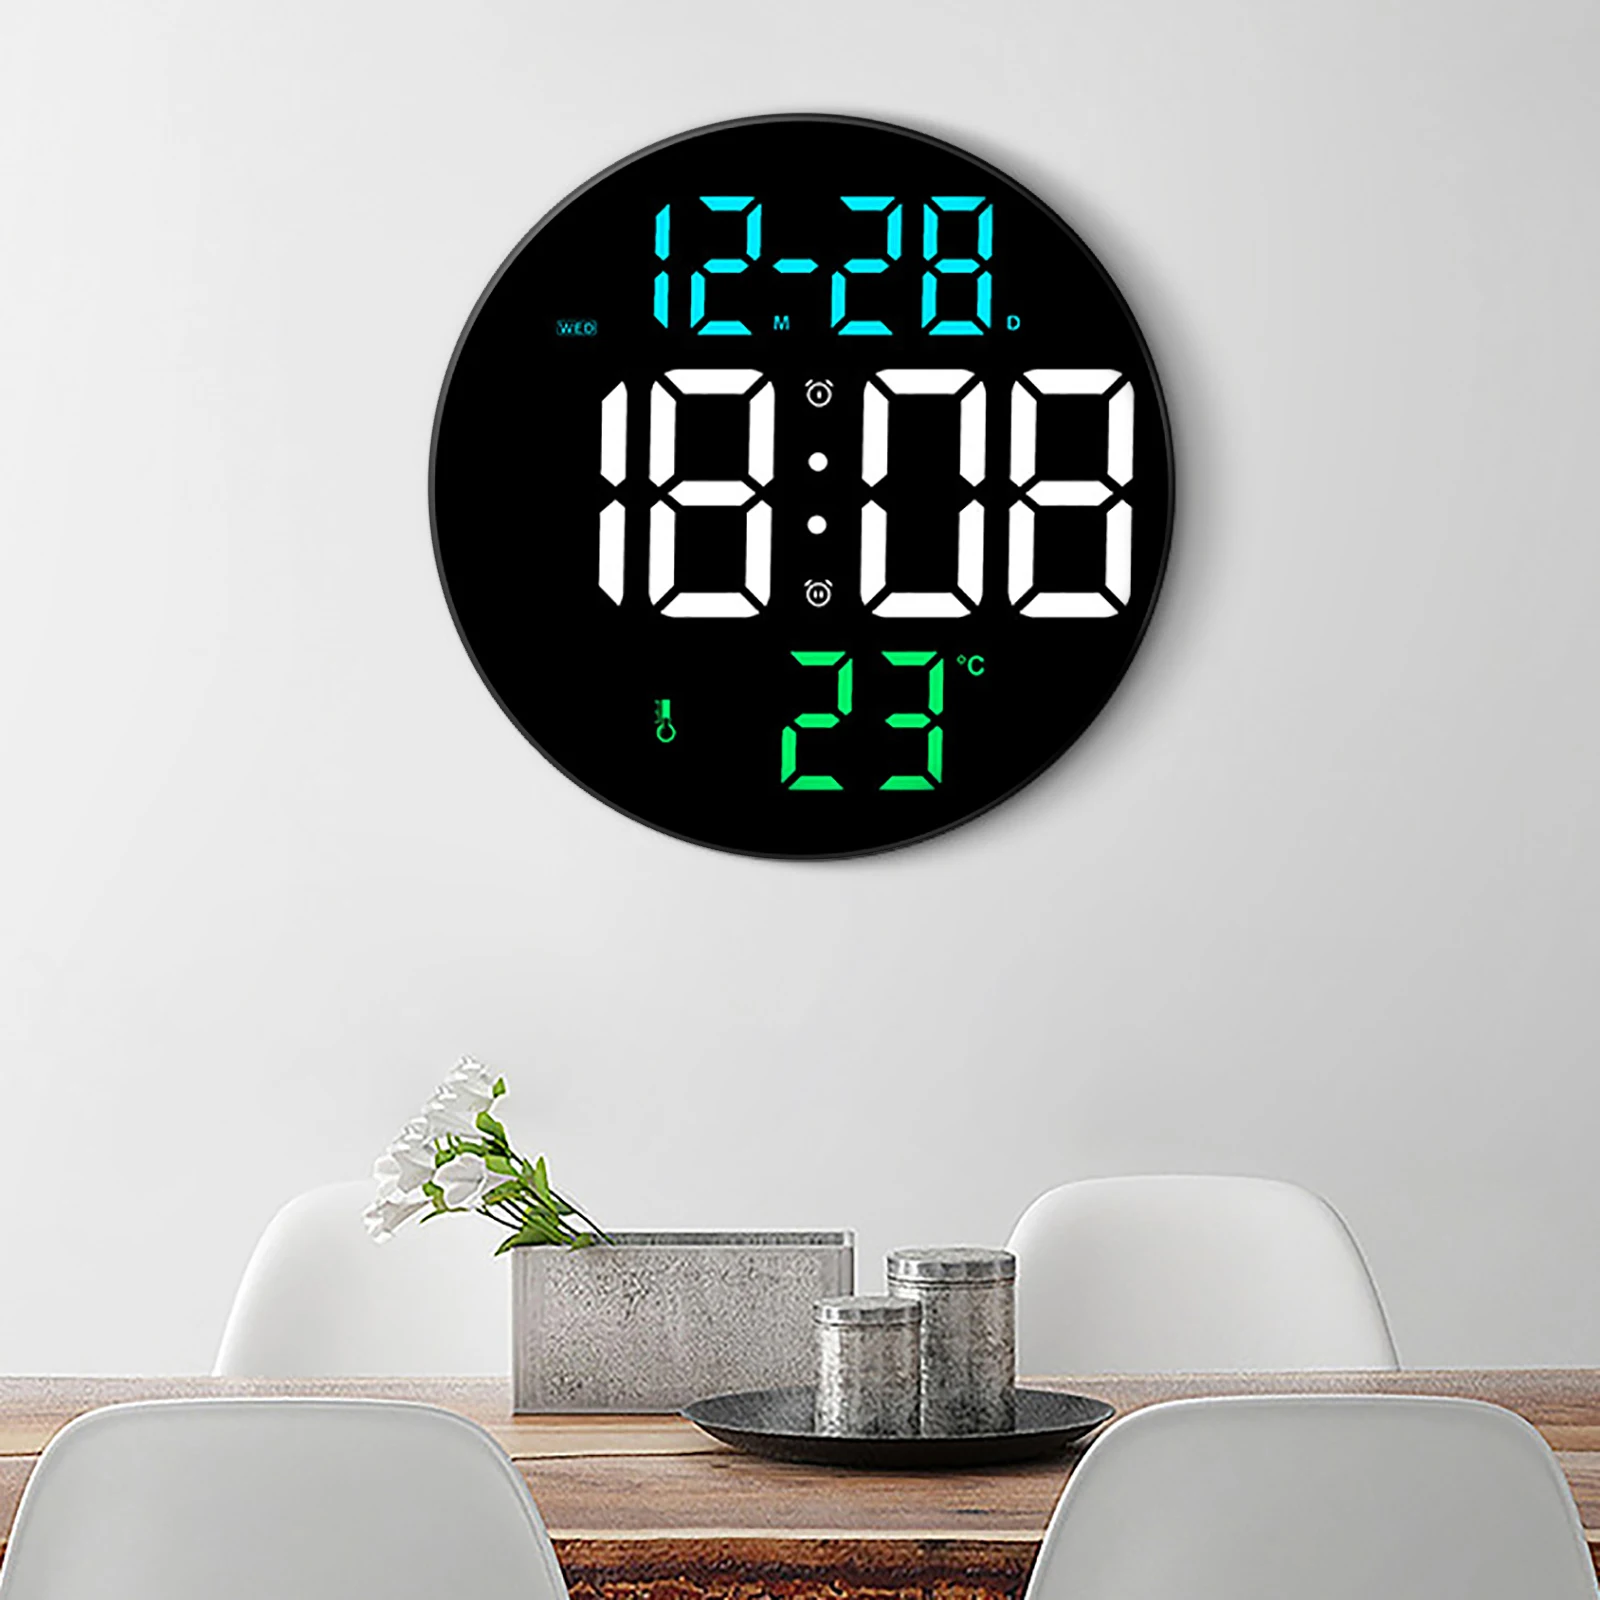 https://ae01.alicdn.com/kf/S9719a4b440de4de5875ff02c60904c217/Round-LED-Wall-Clock-Large-Screen-Temperature-Date-Day-Display-Digital-Clock-Kitchen-Living-Room-Clock.jpg